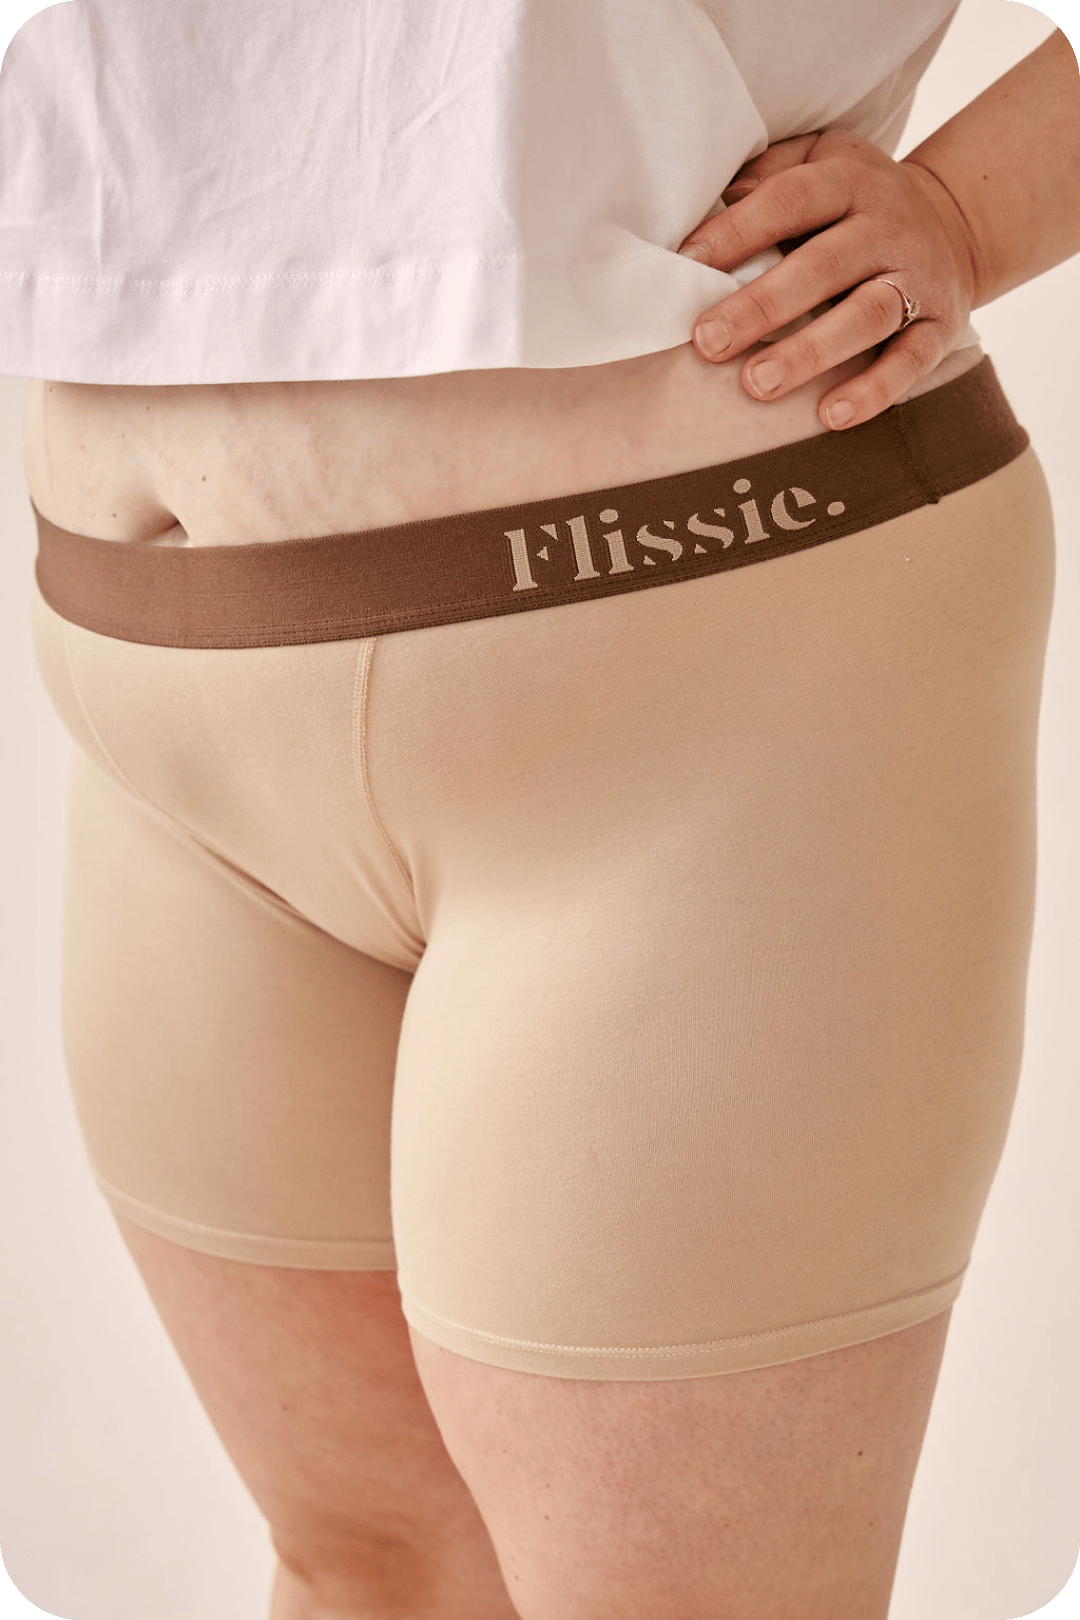 Flissie Womens Boxers | 5 Star Reviews | Bamboo Loungewear Underwear